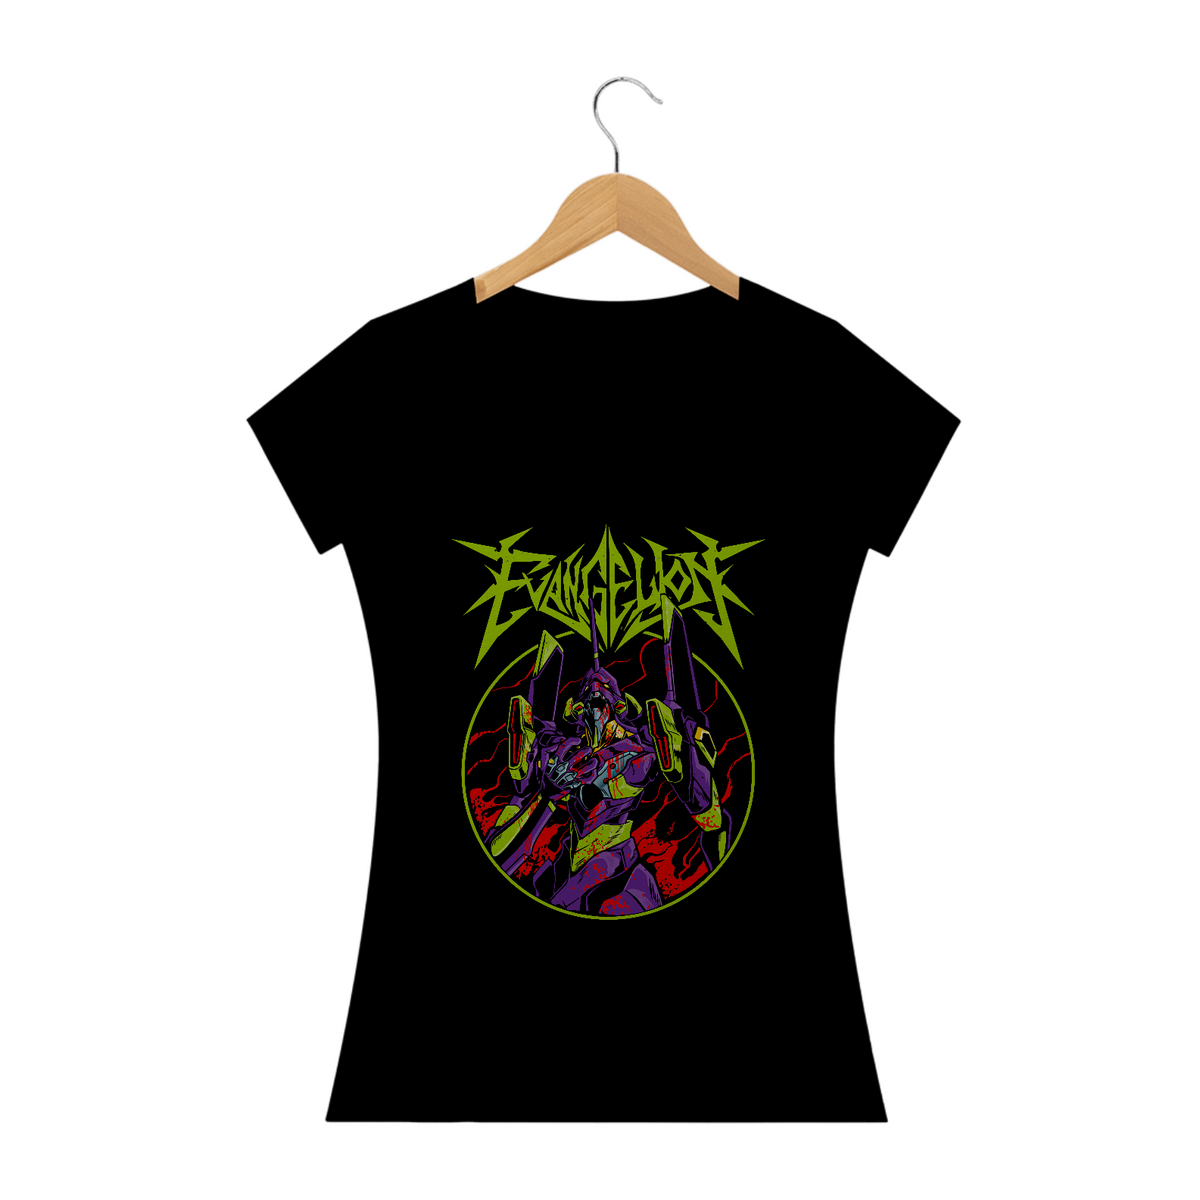 Nome do produto: Camiseta Feminina Neon Genesis Evangelion Estampa ANIME GEEK ROCK